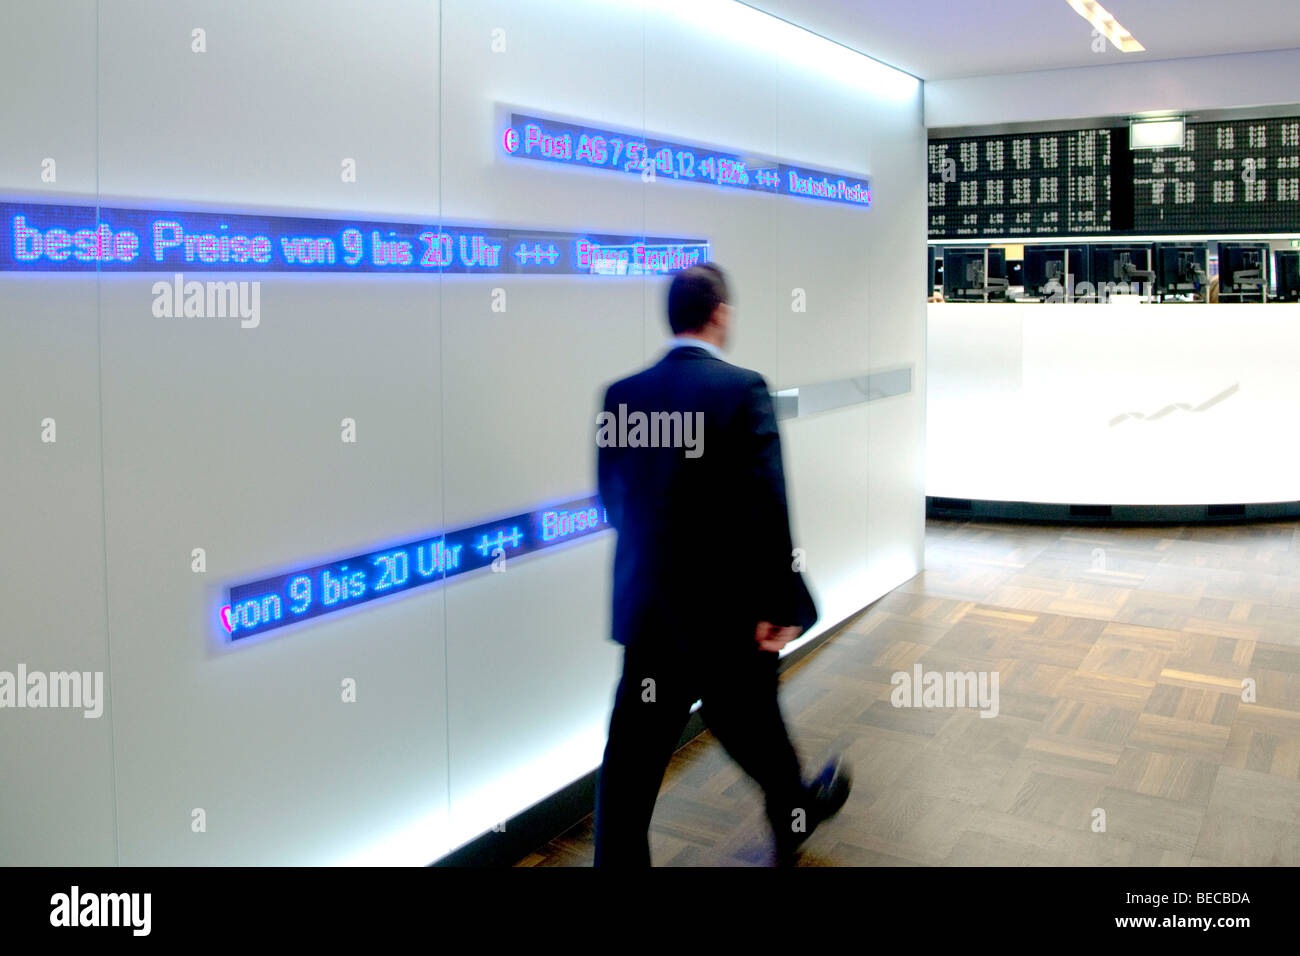 Main trading room of the Frankfurt Stock Exchange by Deutsche Boerse AG in Frankfurt am Main, Hesse, Germany, Europe Stock Photo